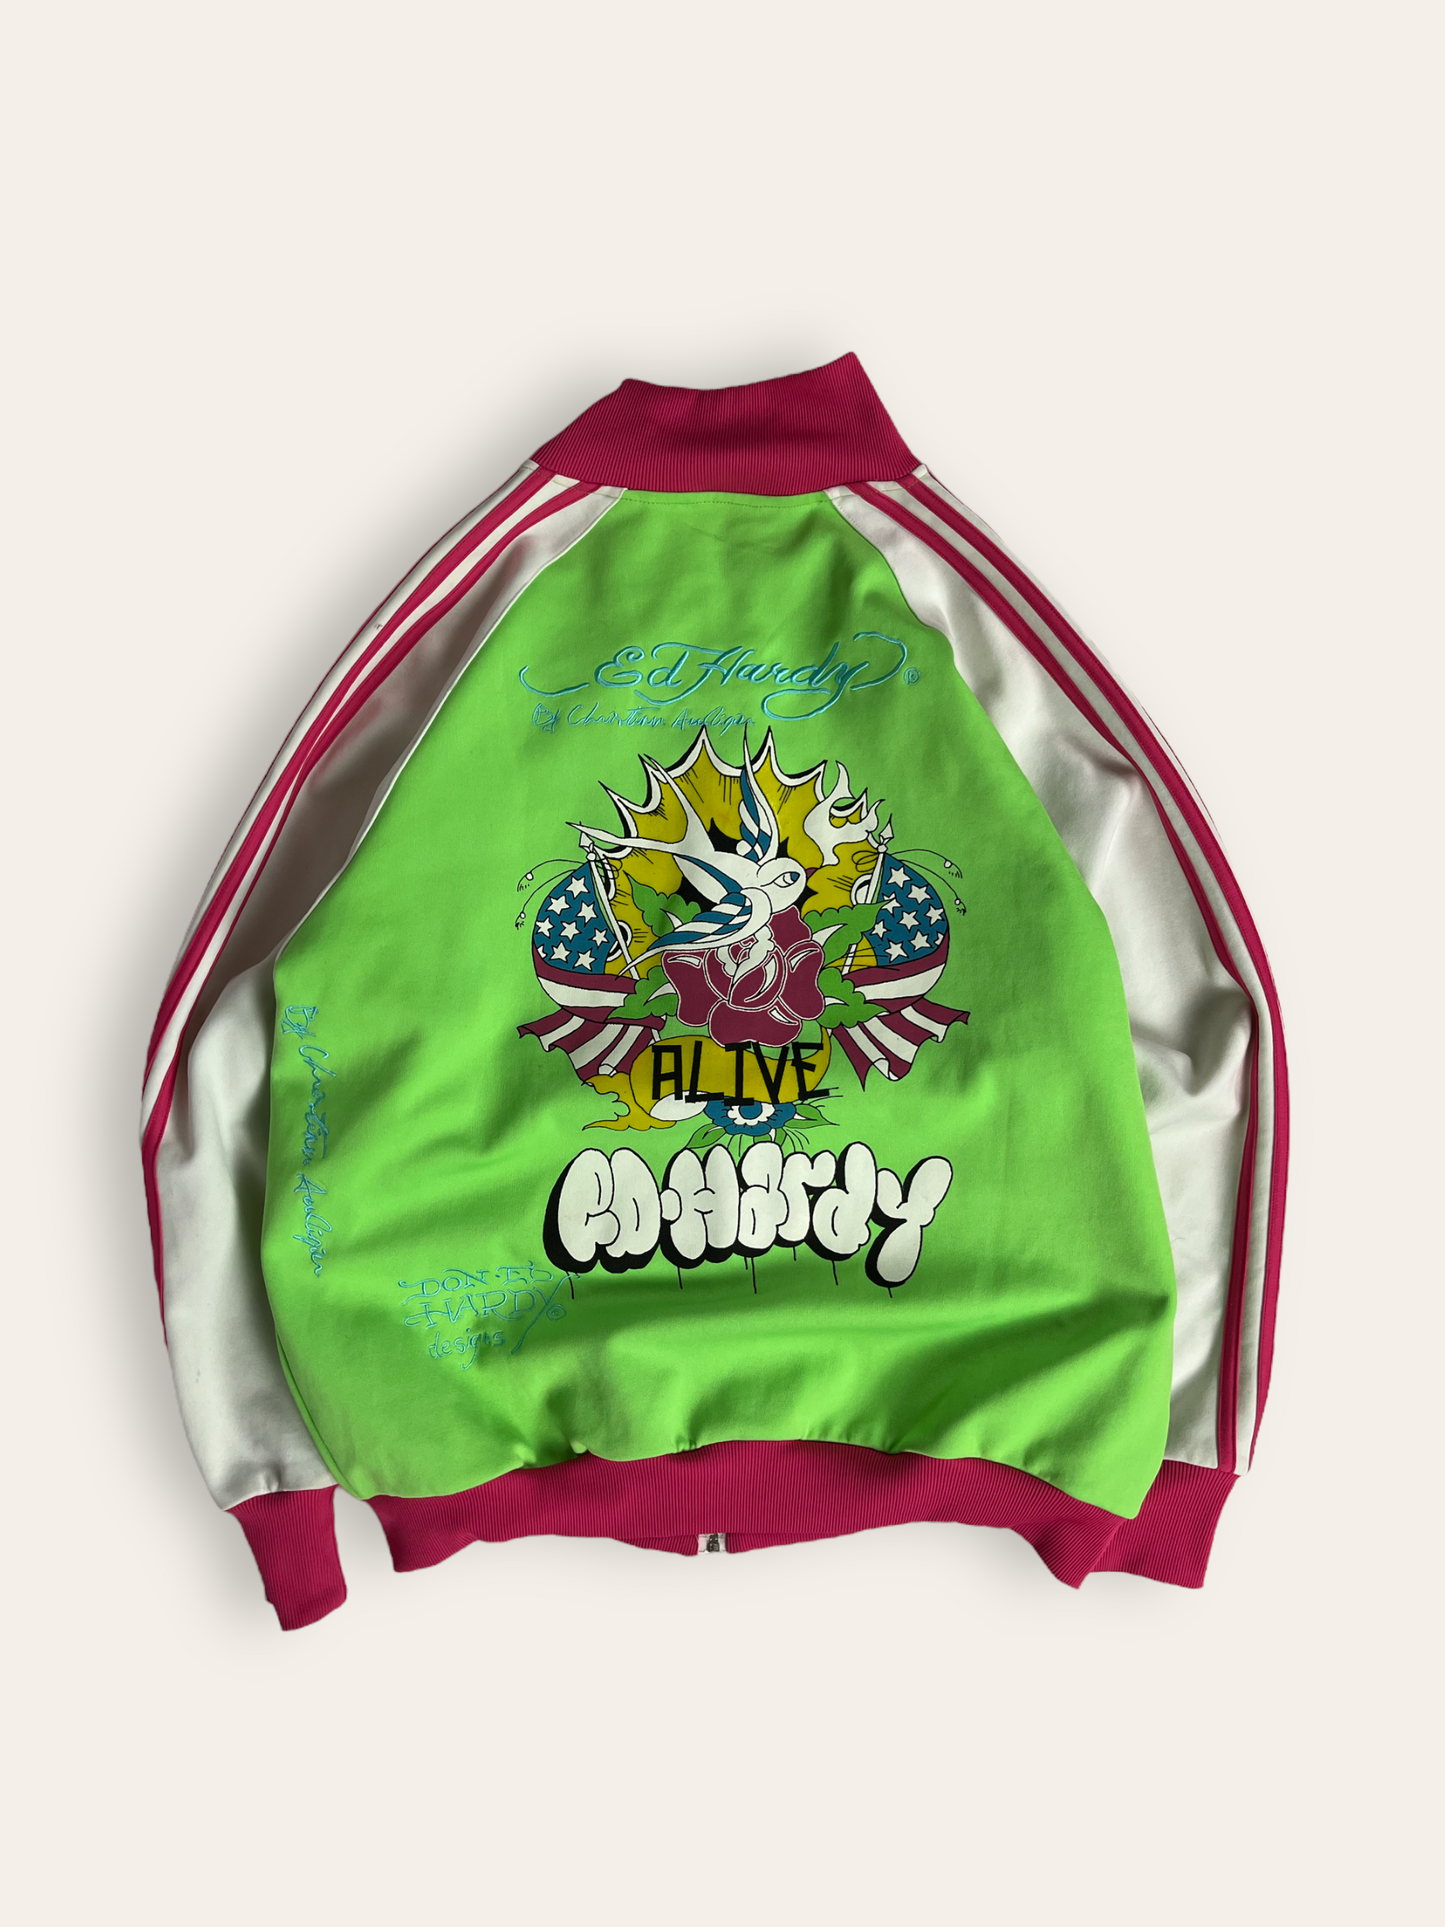 (XL) ‘00d Ed Hardy Grafitti Track Jacket